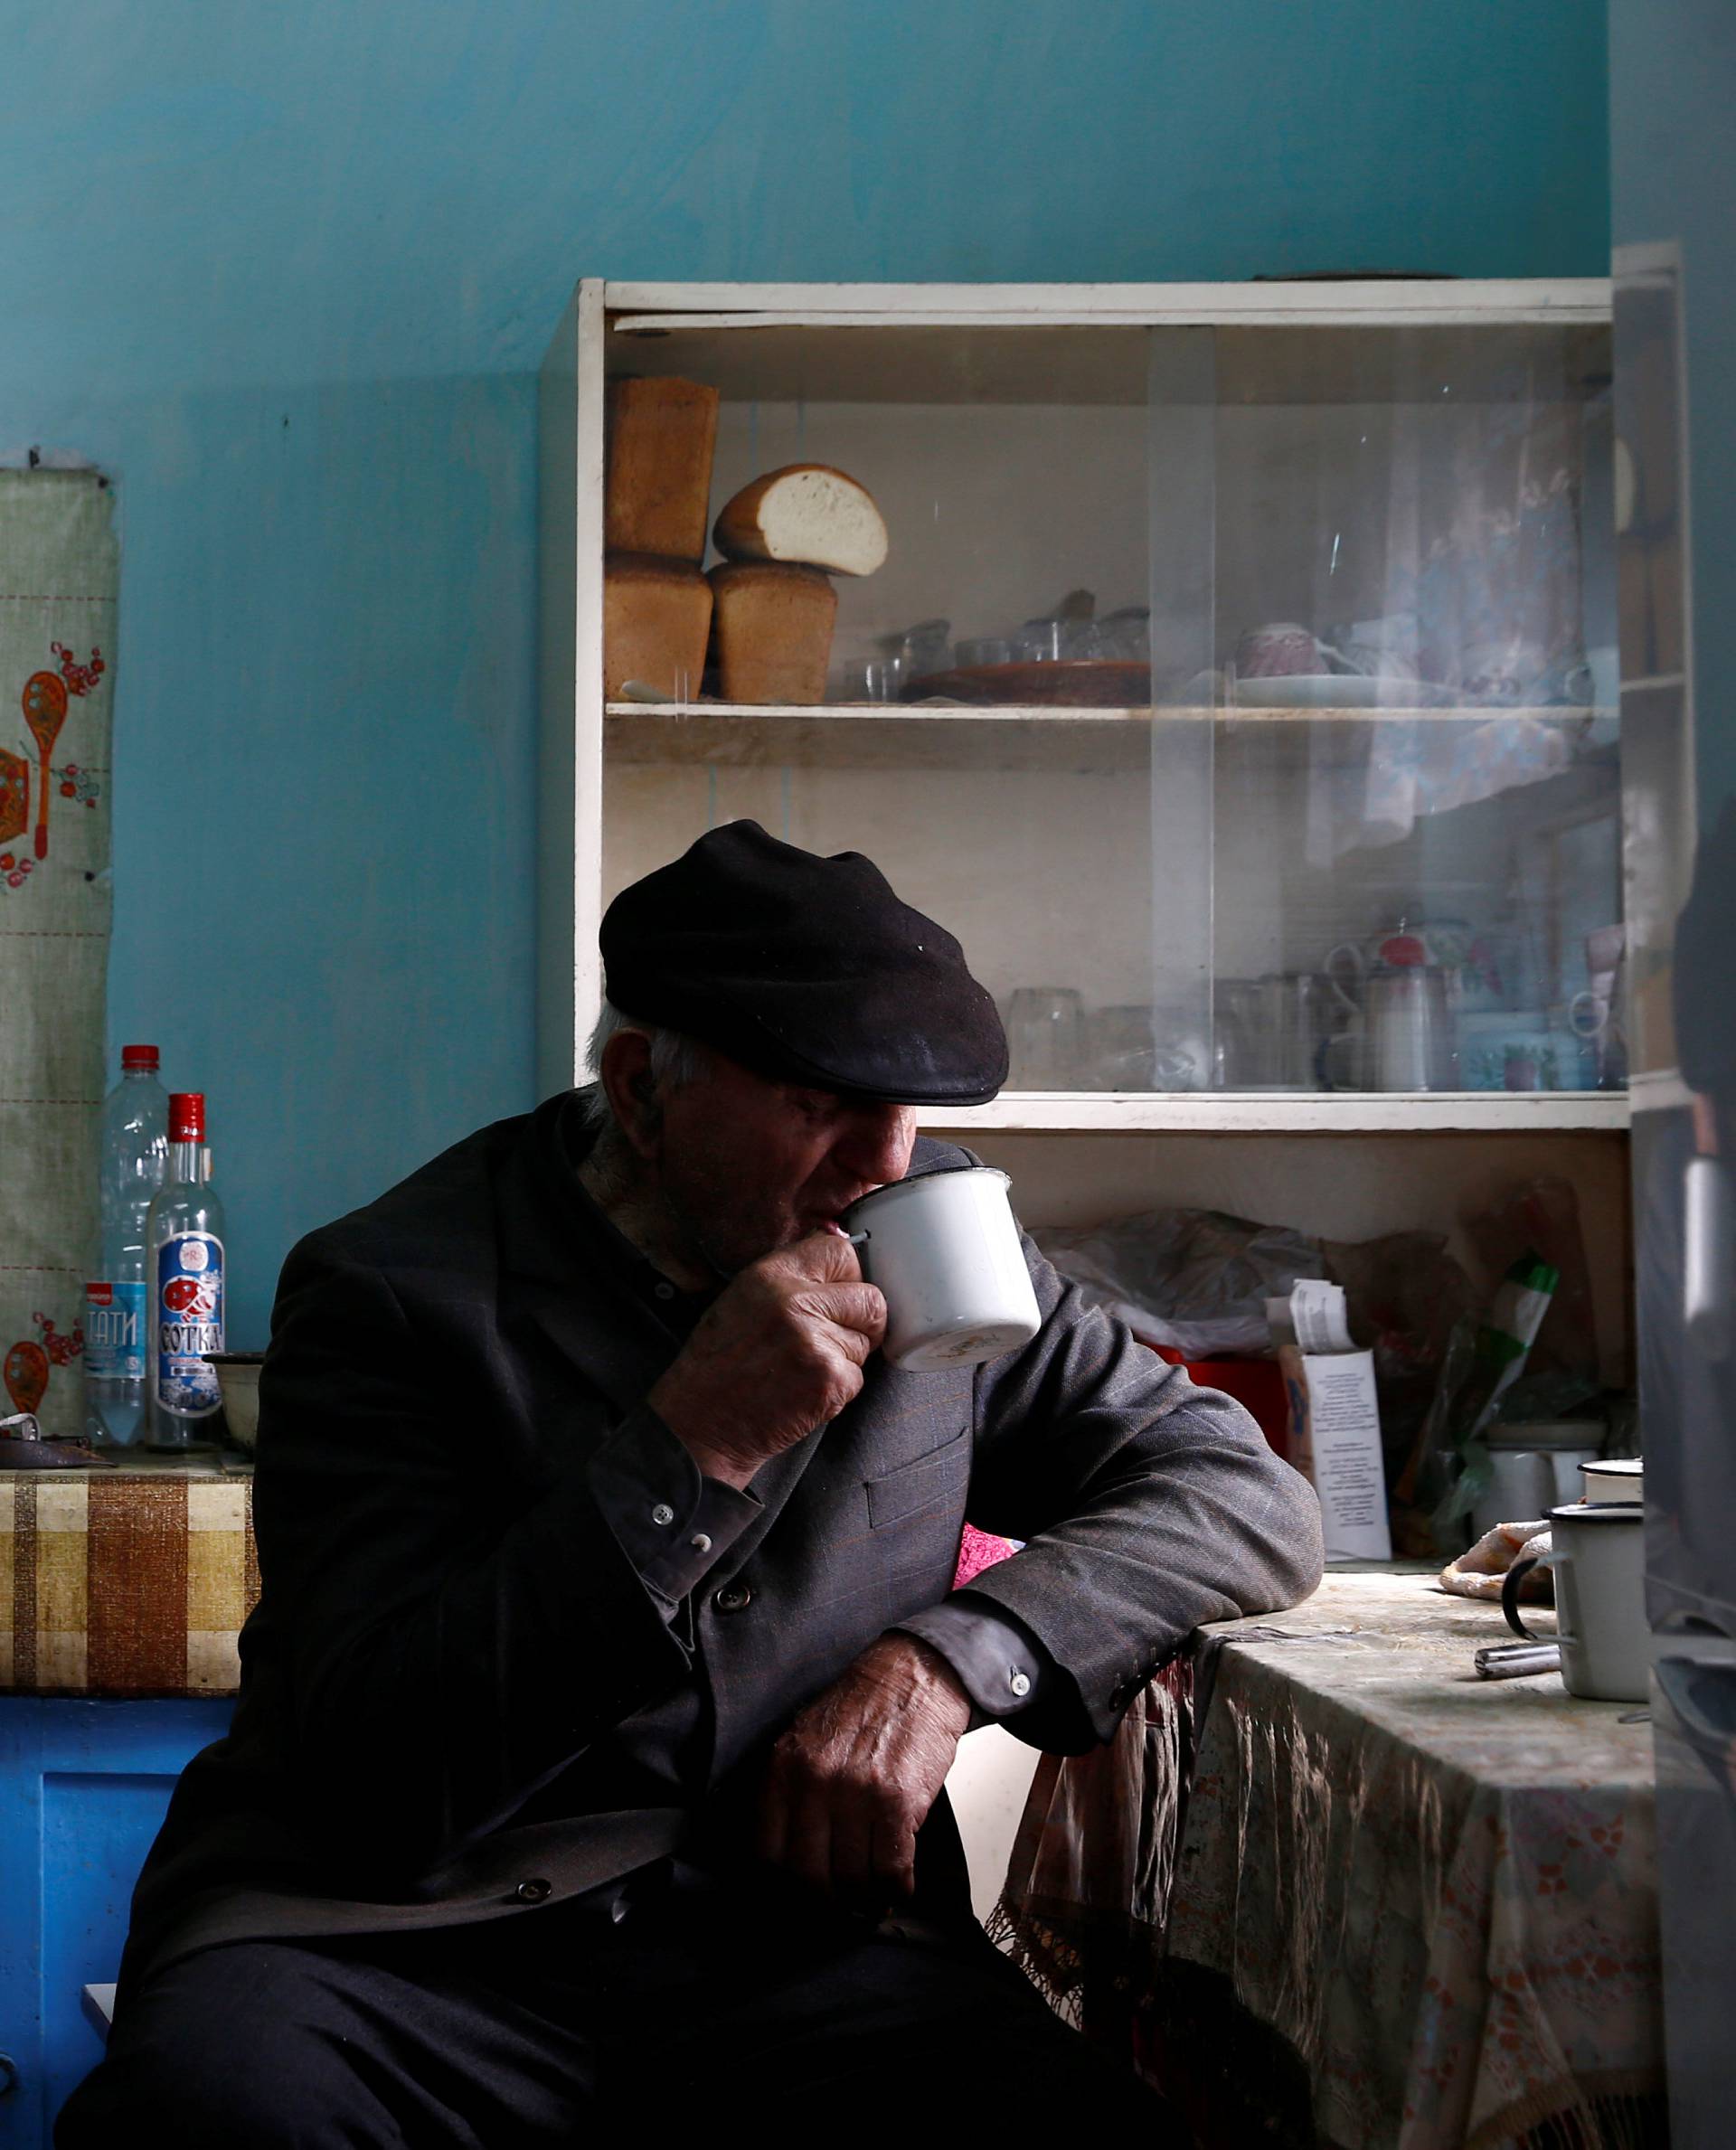 Jedini živi u zoni Černobila: Živ sam jer nisam otišao...